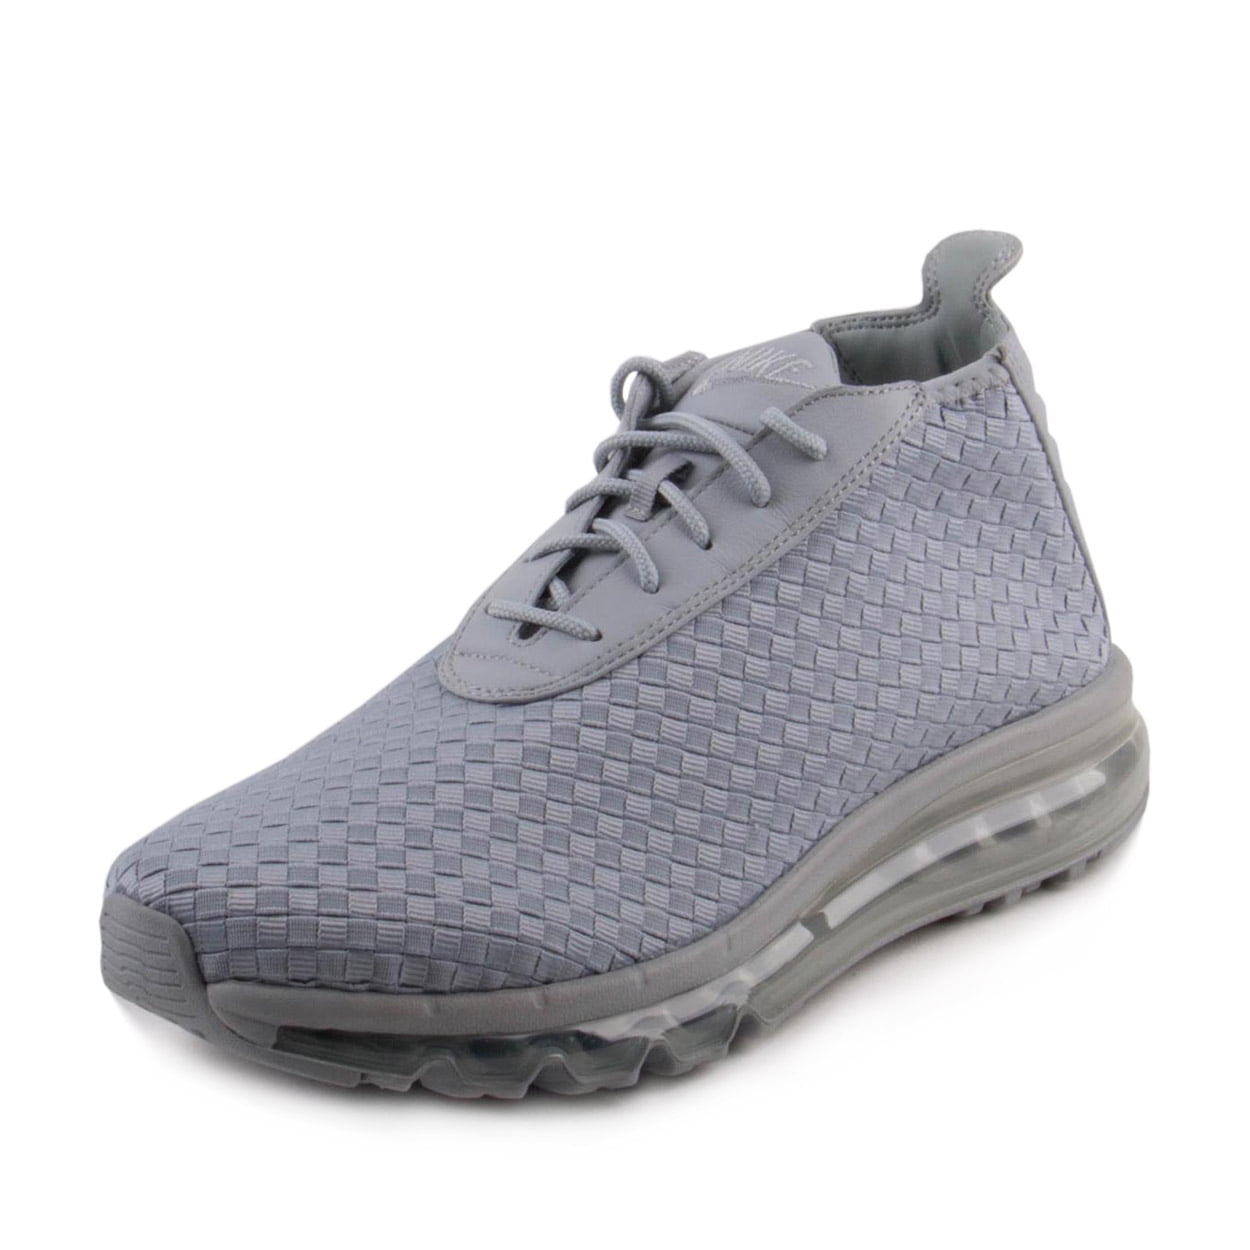 Nike Mens Air Max Woven Grey/White 921854-001 Size 8 - Walmart.com